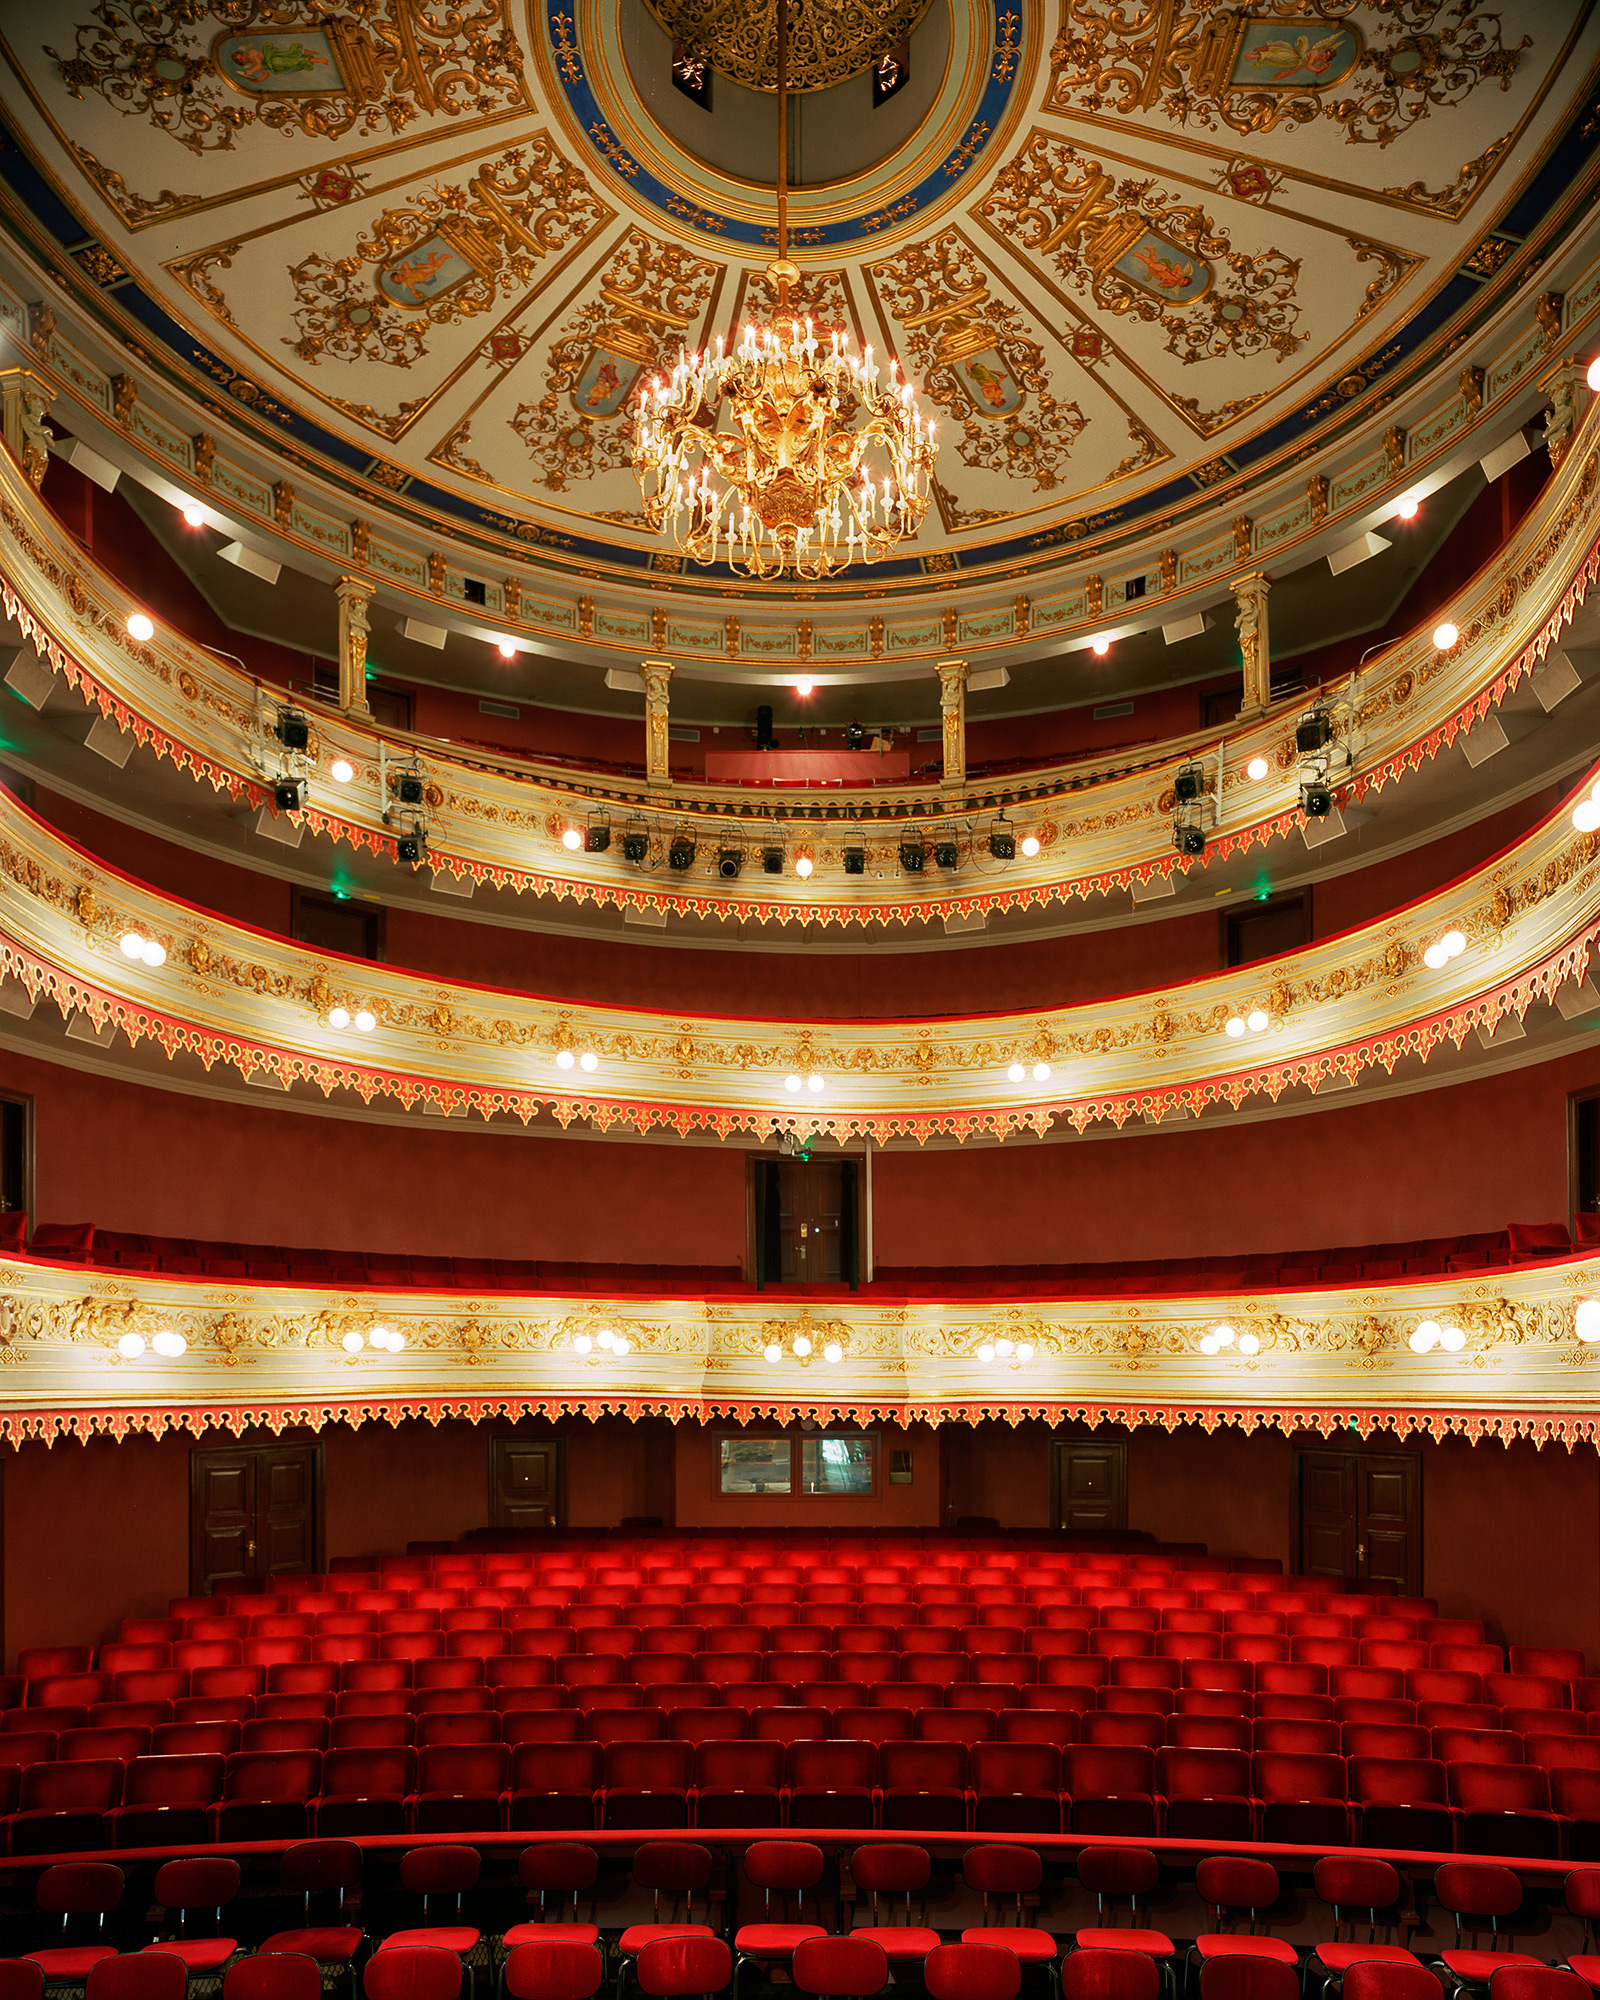  Stora teatern  B C Malmberg 